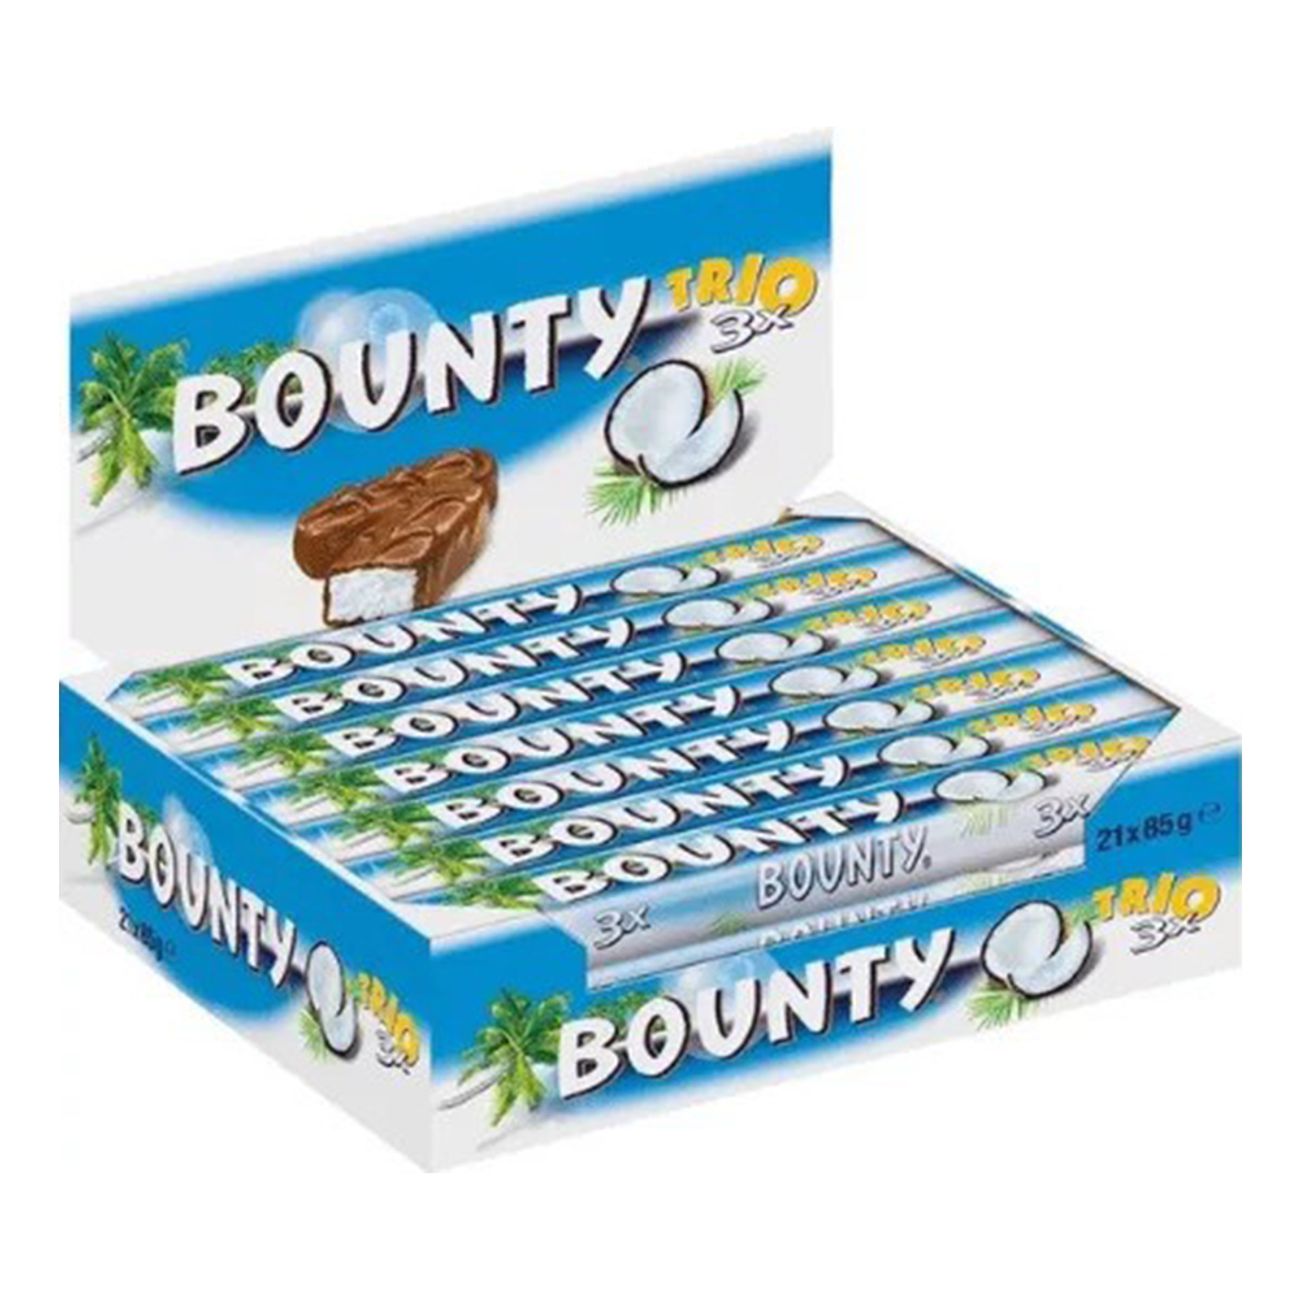 bounty-trio-72070-2